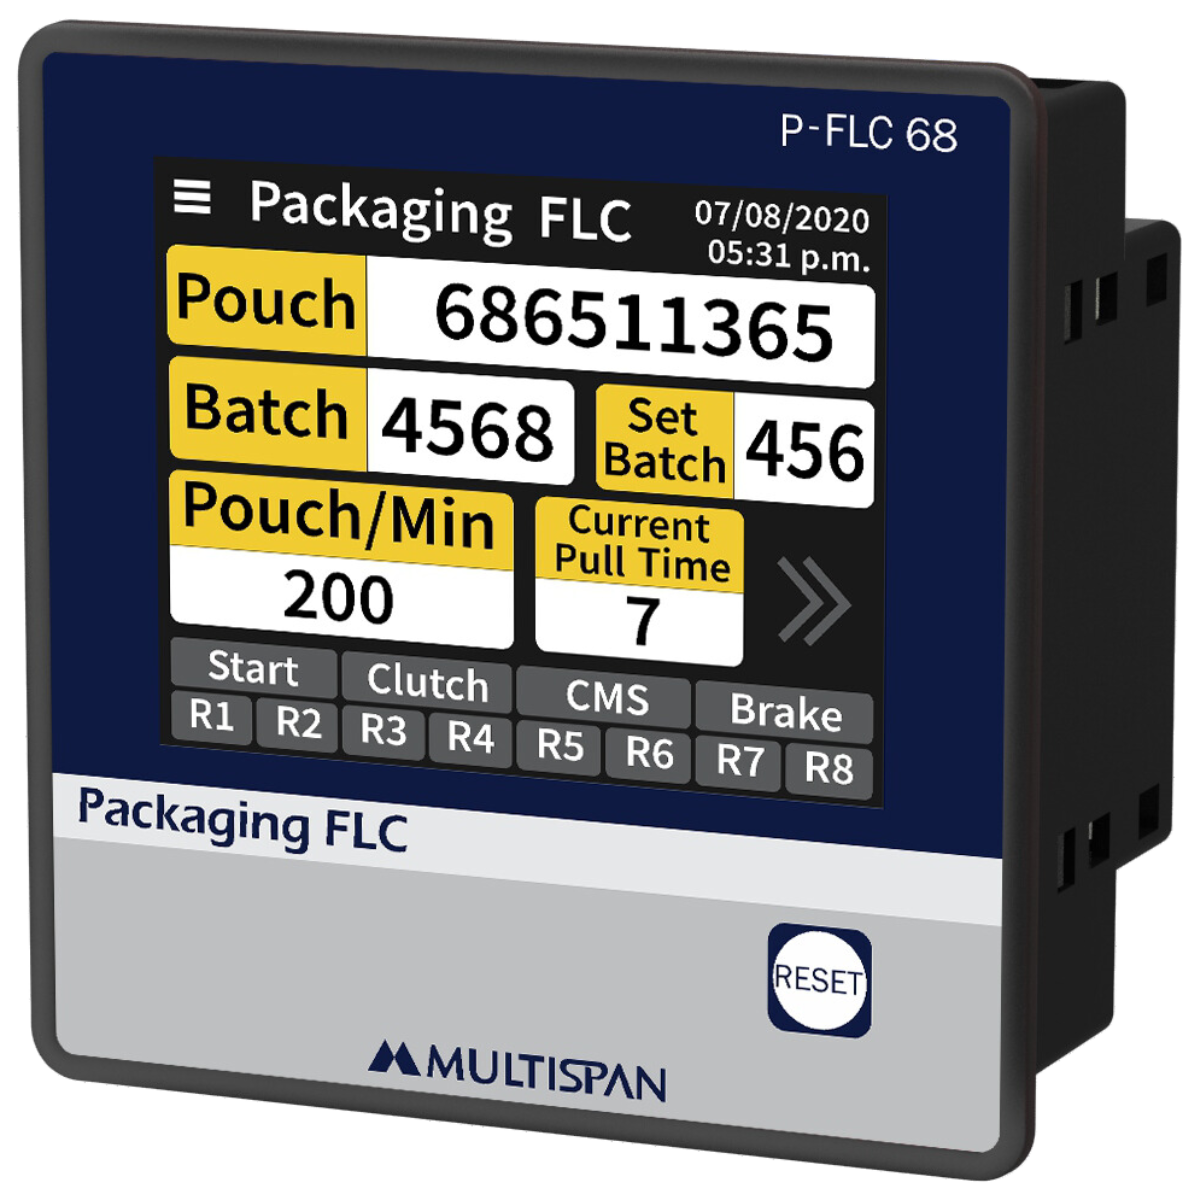 PFLC-68 - Advanced Packaging Controller - multispan